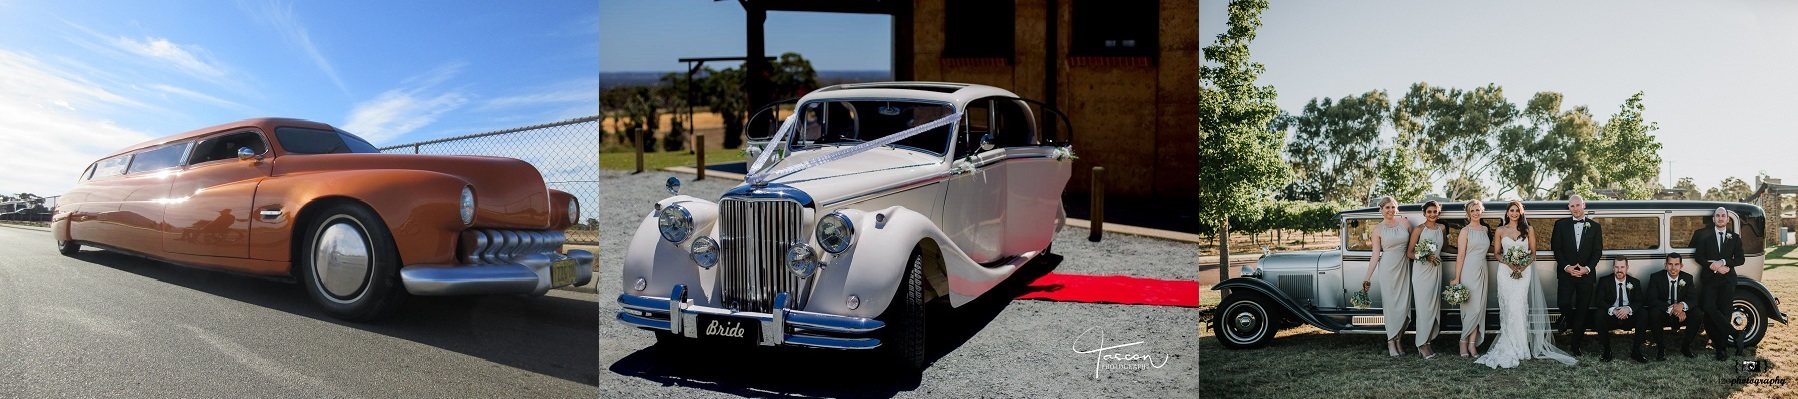 Perth Wedding Cars, Perth Classics Cars, Perth Limo Hire, Vintage Limo Hire